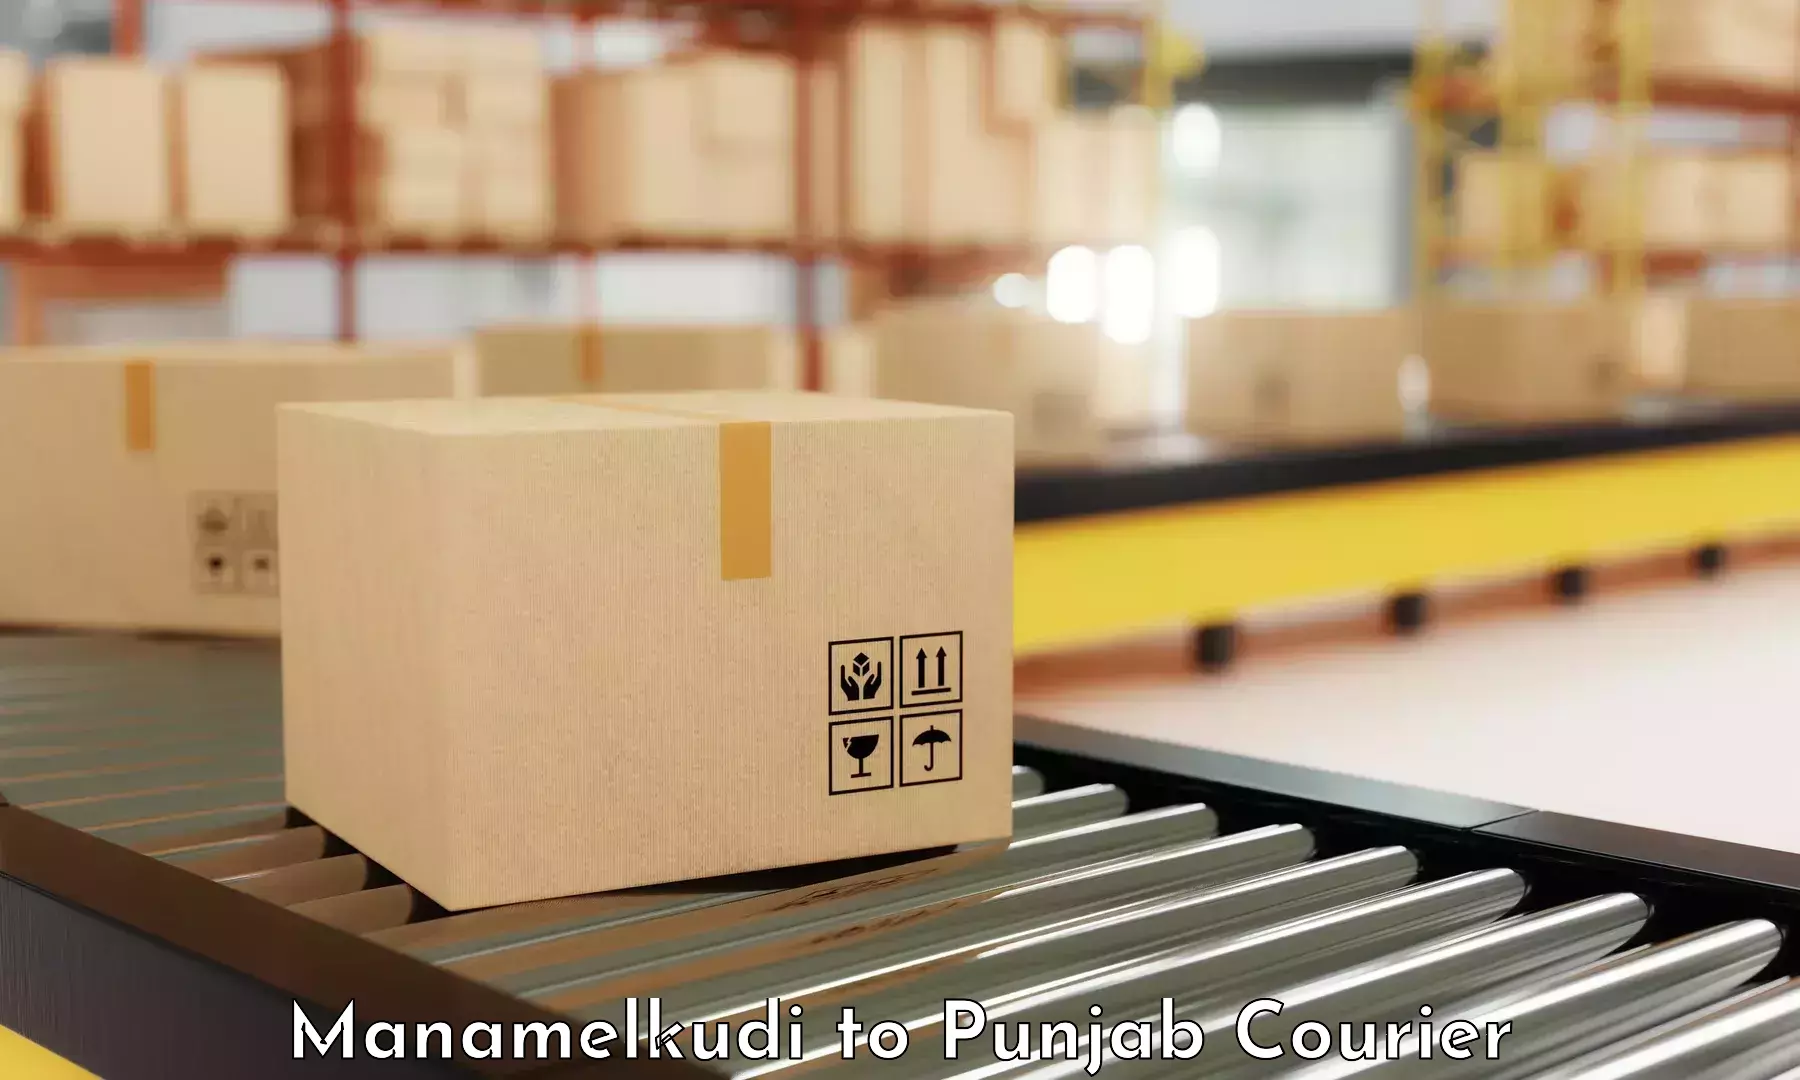 Efficient parcel tracking Manamelkudi to Punjab